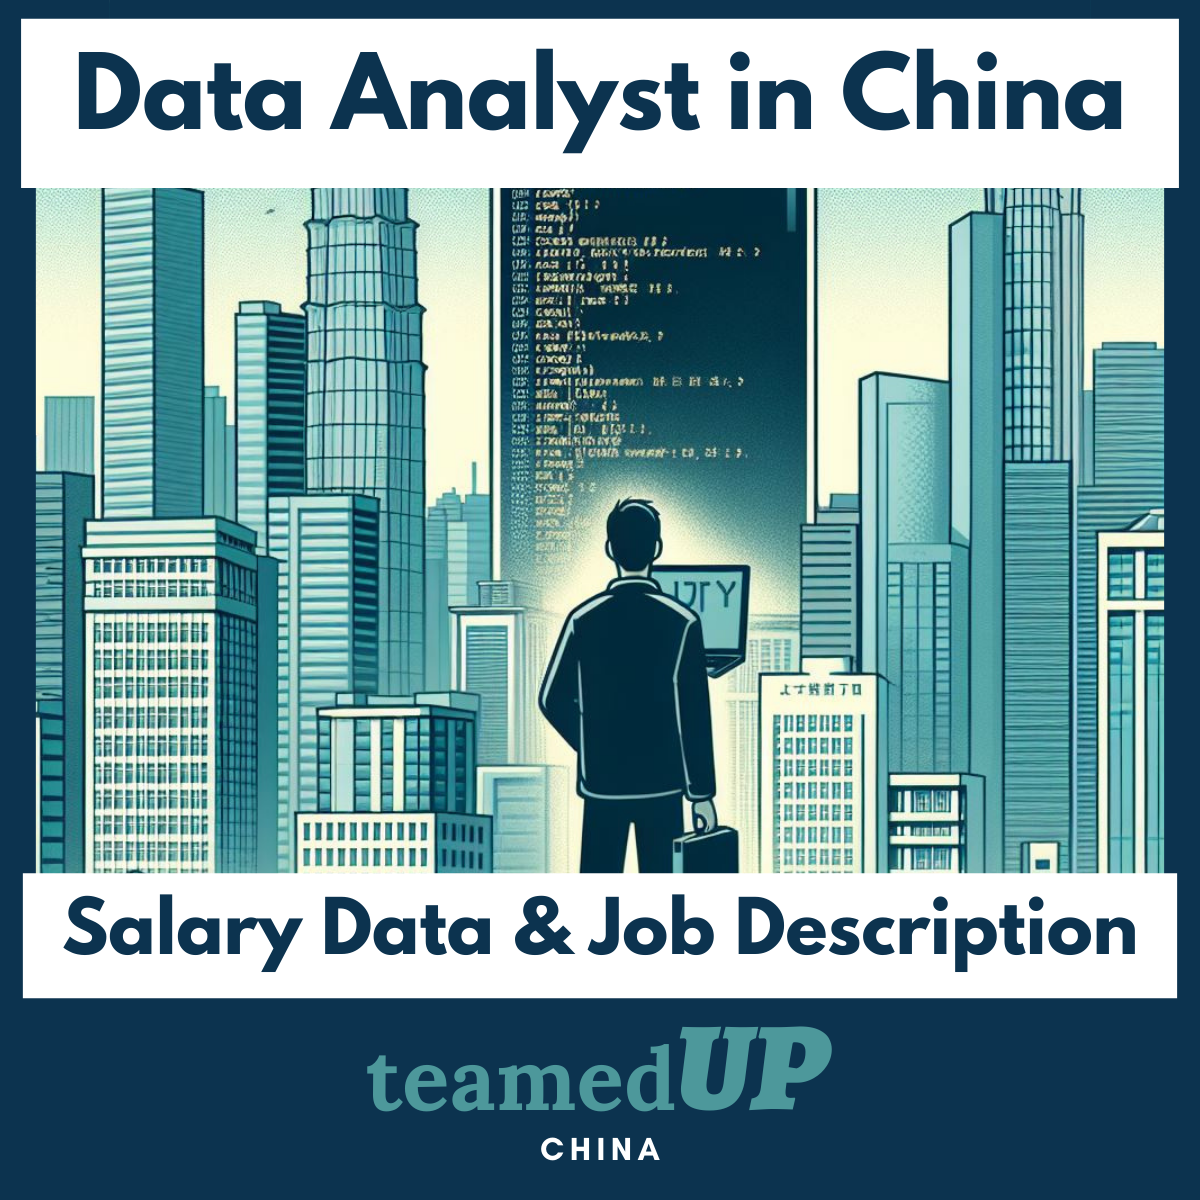 Data Analysts in China - Average Salary and JD - TeamedUp China